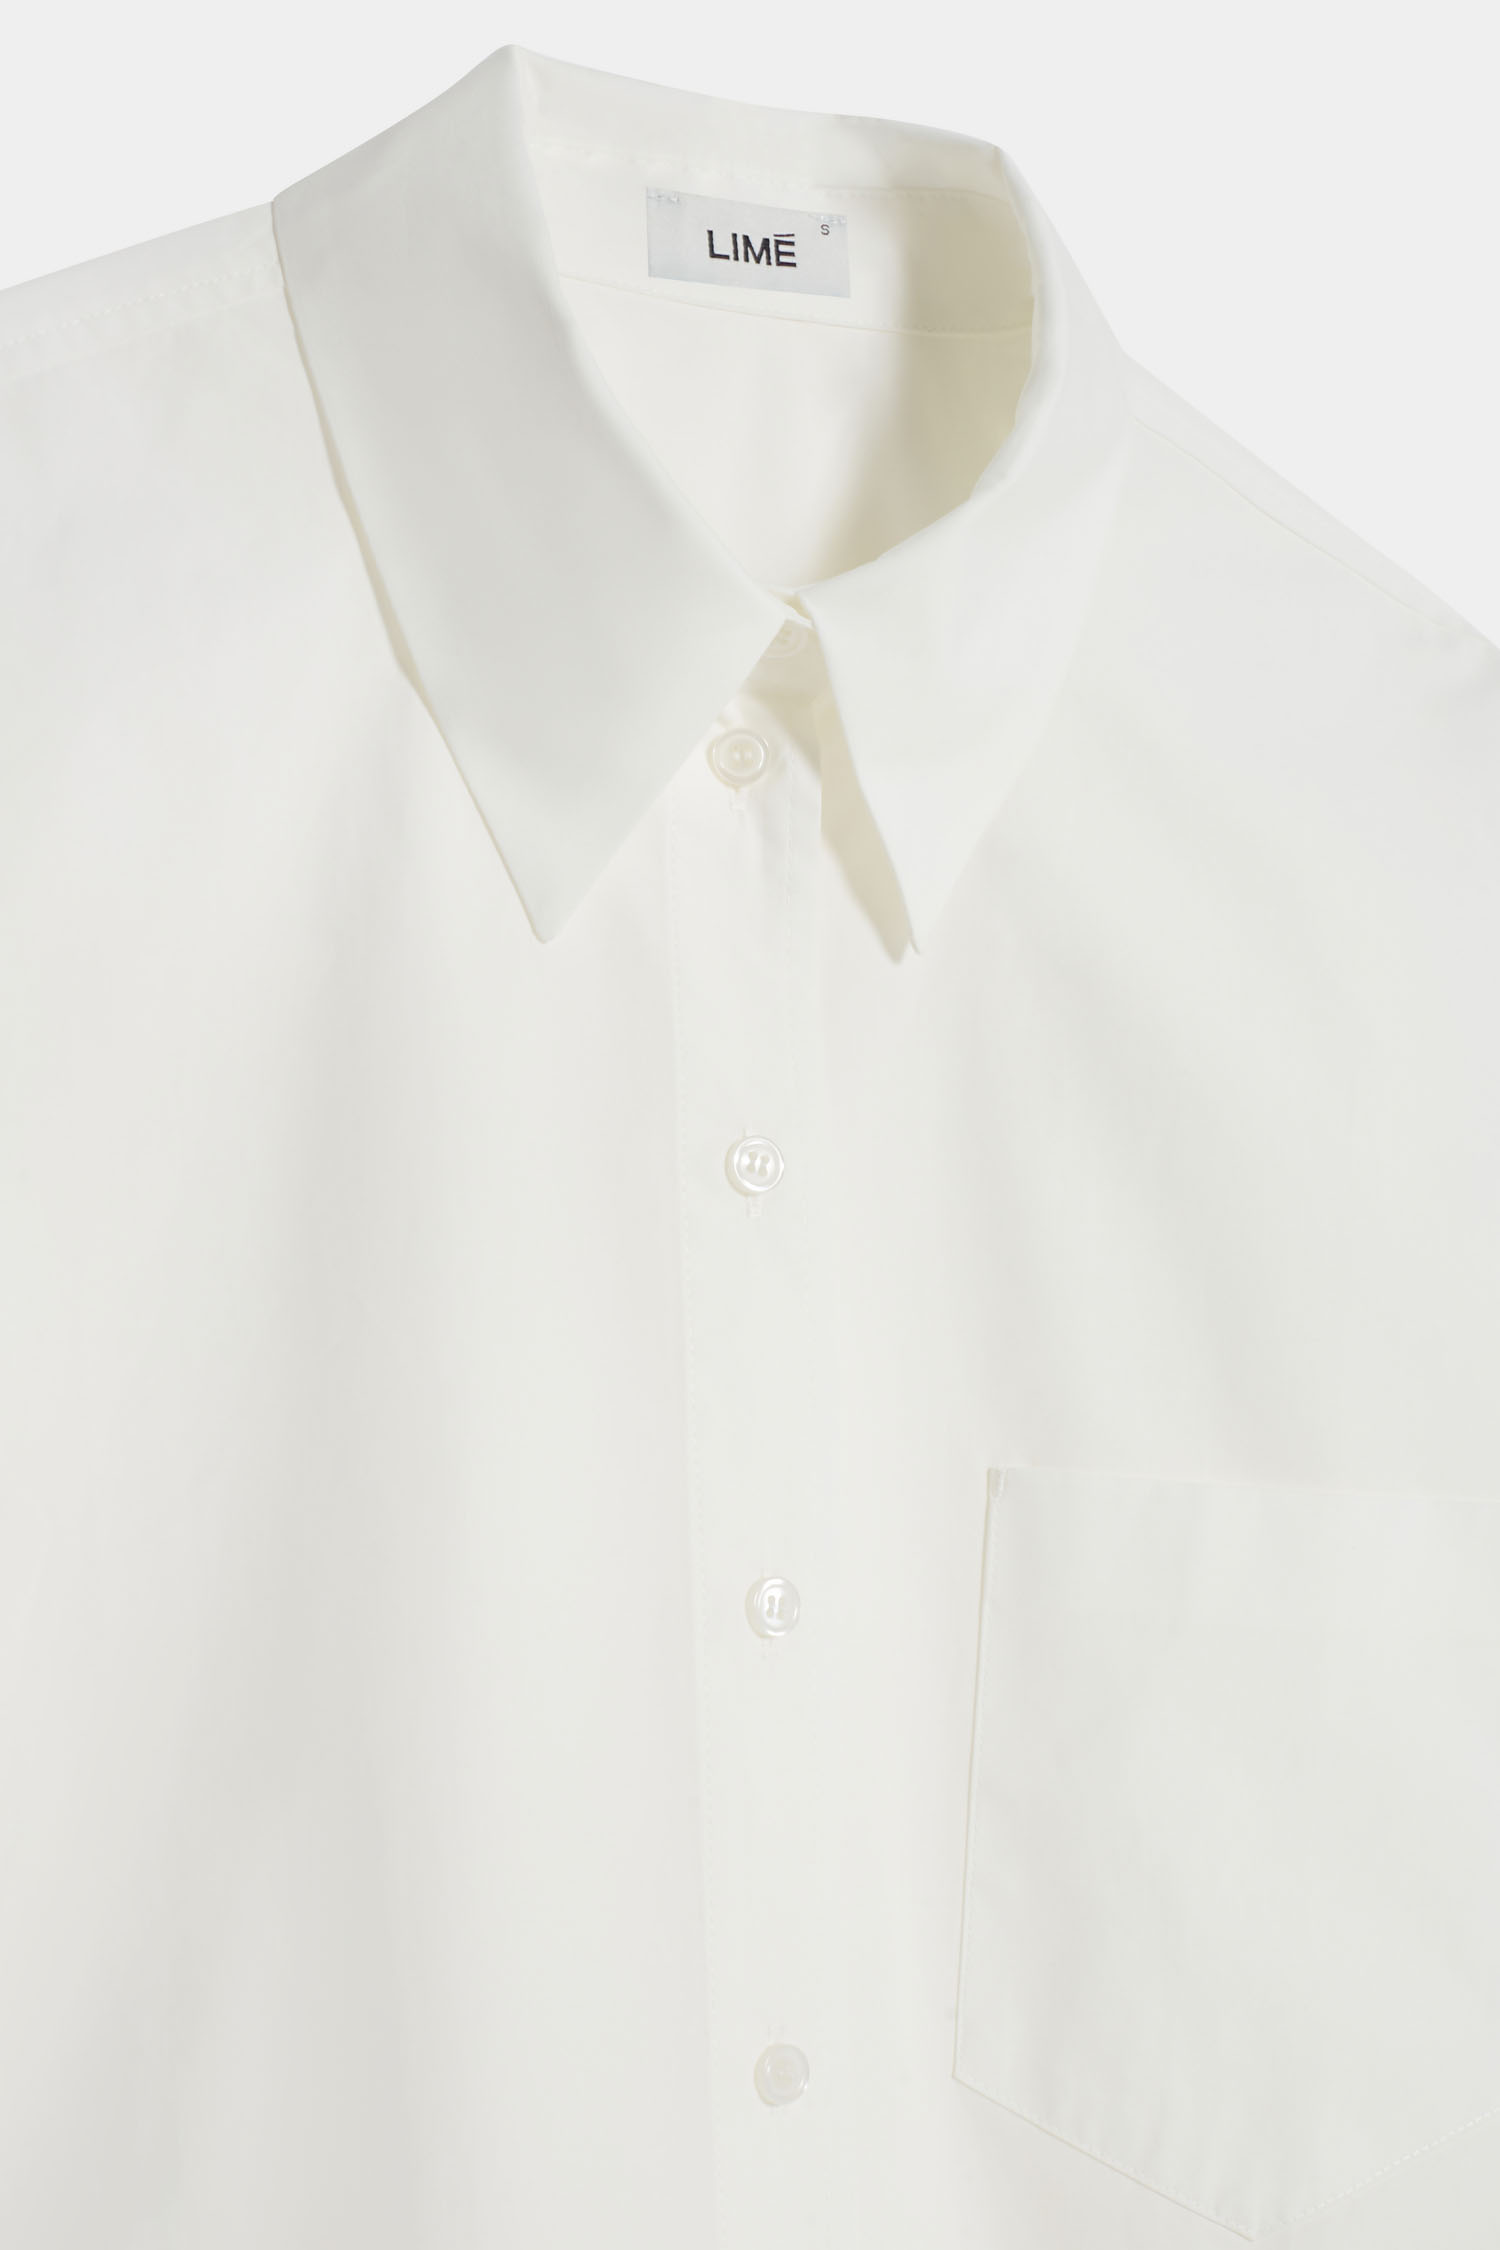 shirt white - LIME